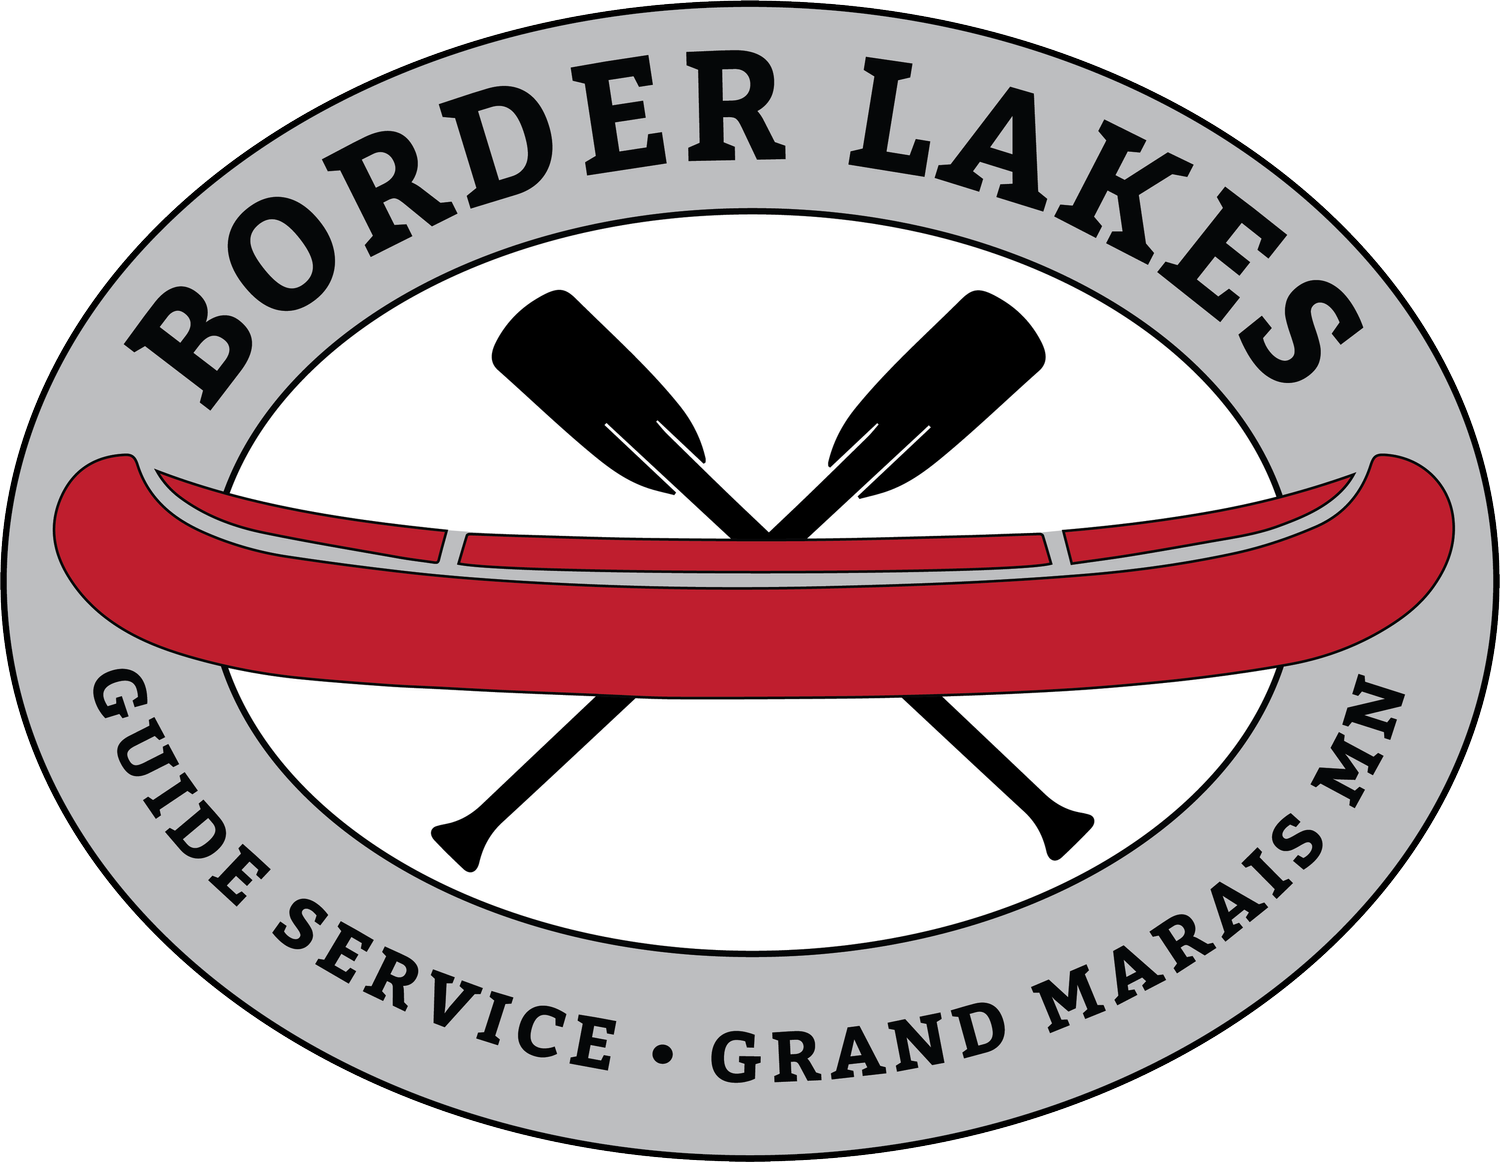 Border Lakes Tour Company - Guided Canoe Trips in Grand Marais